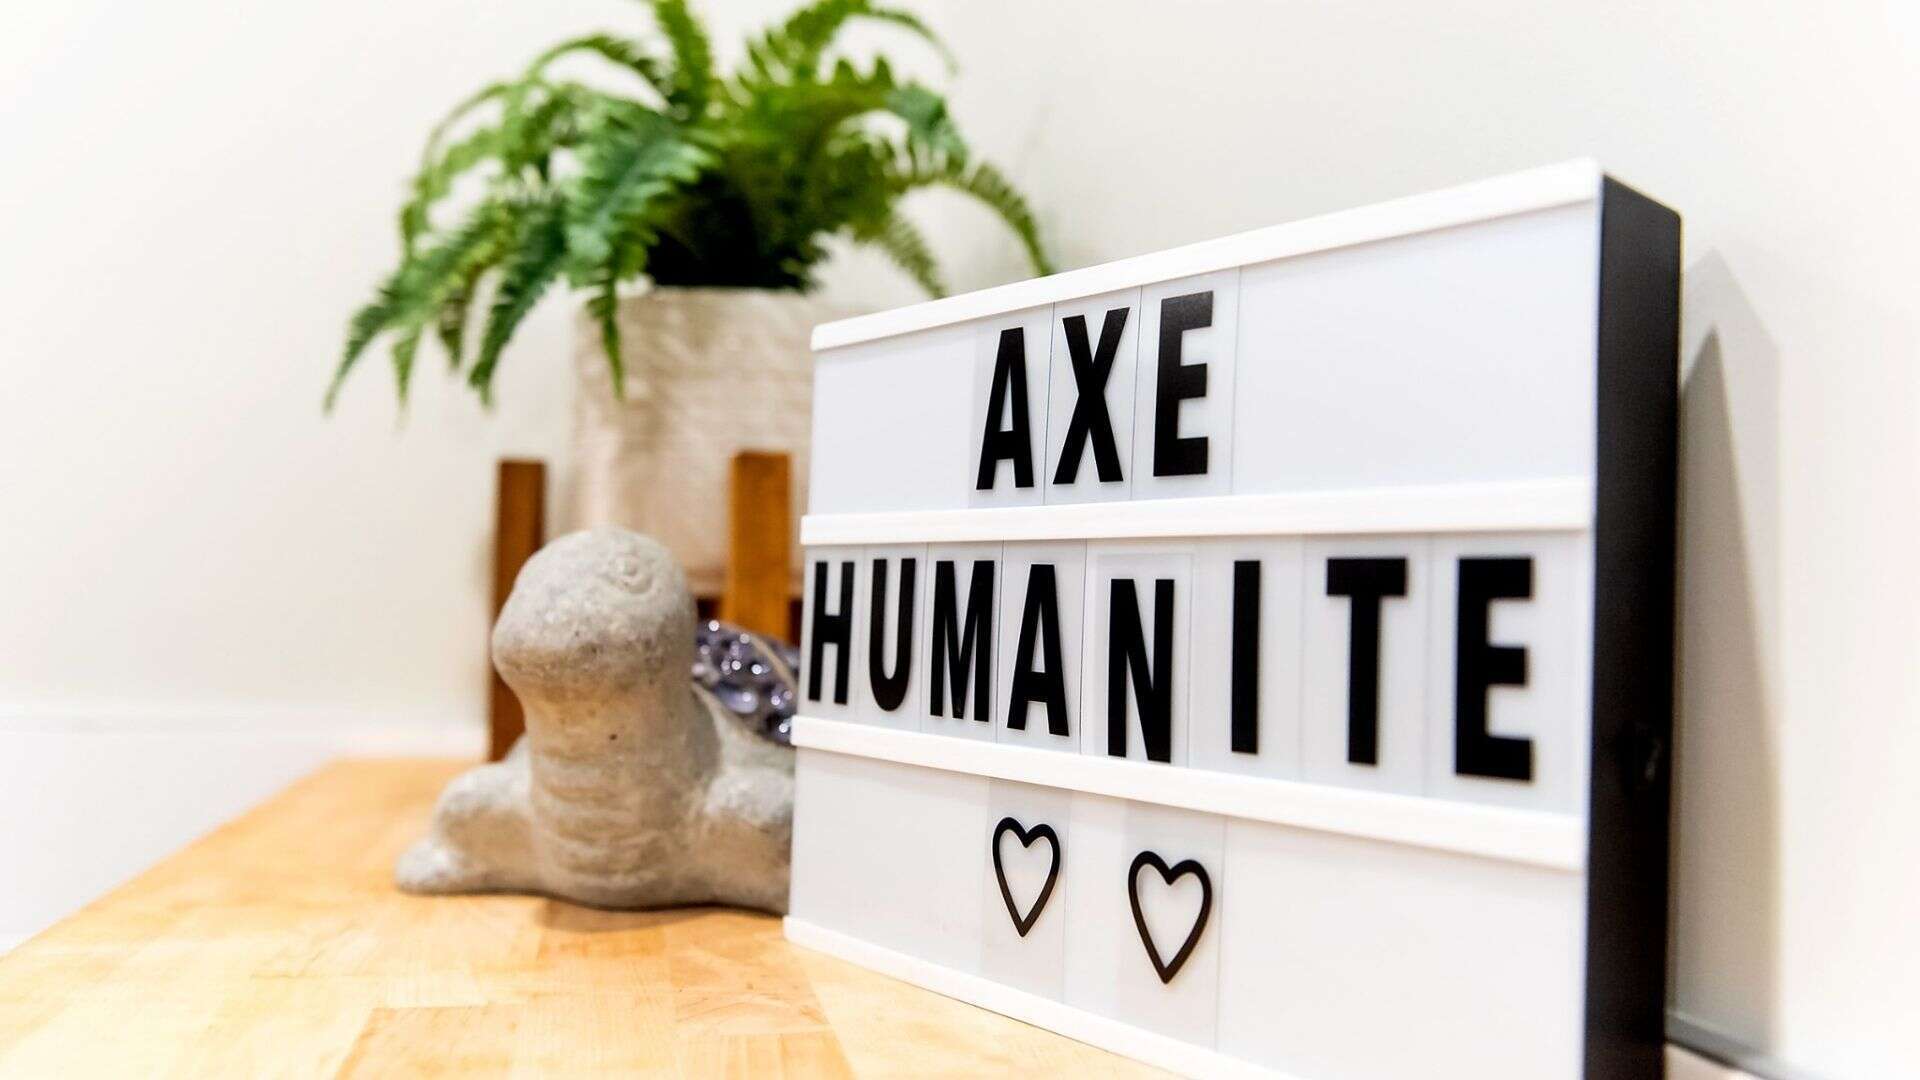 axe-humanite-2281.jpg